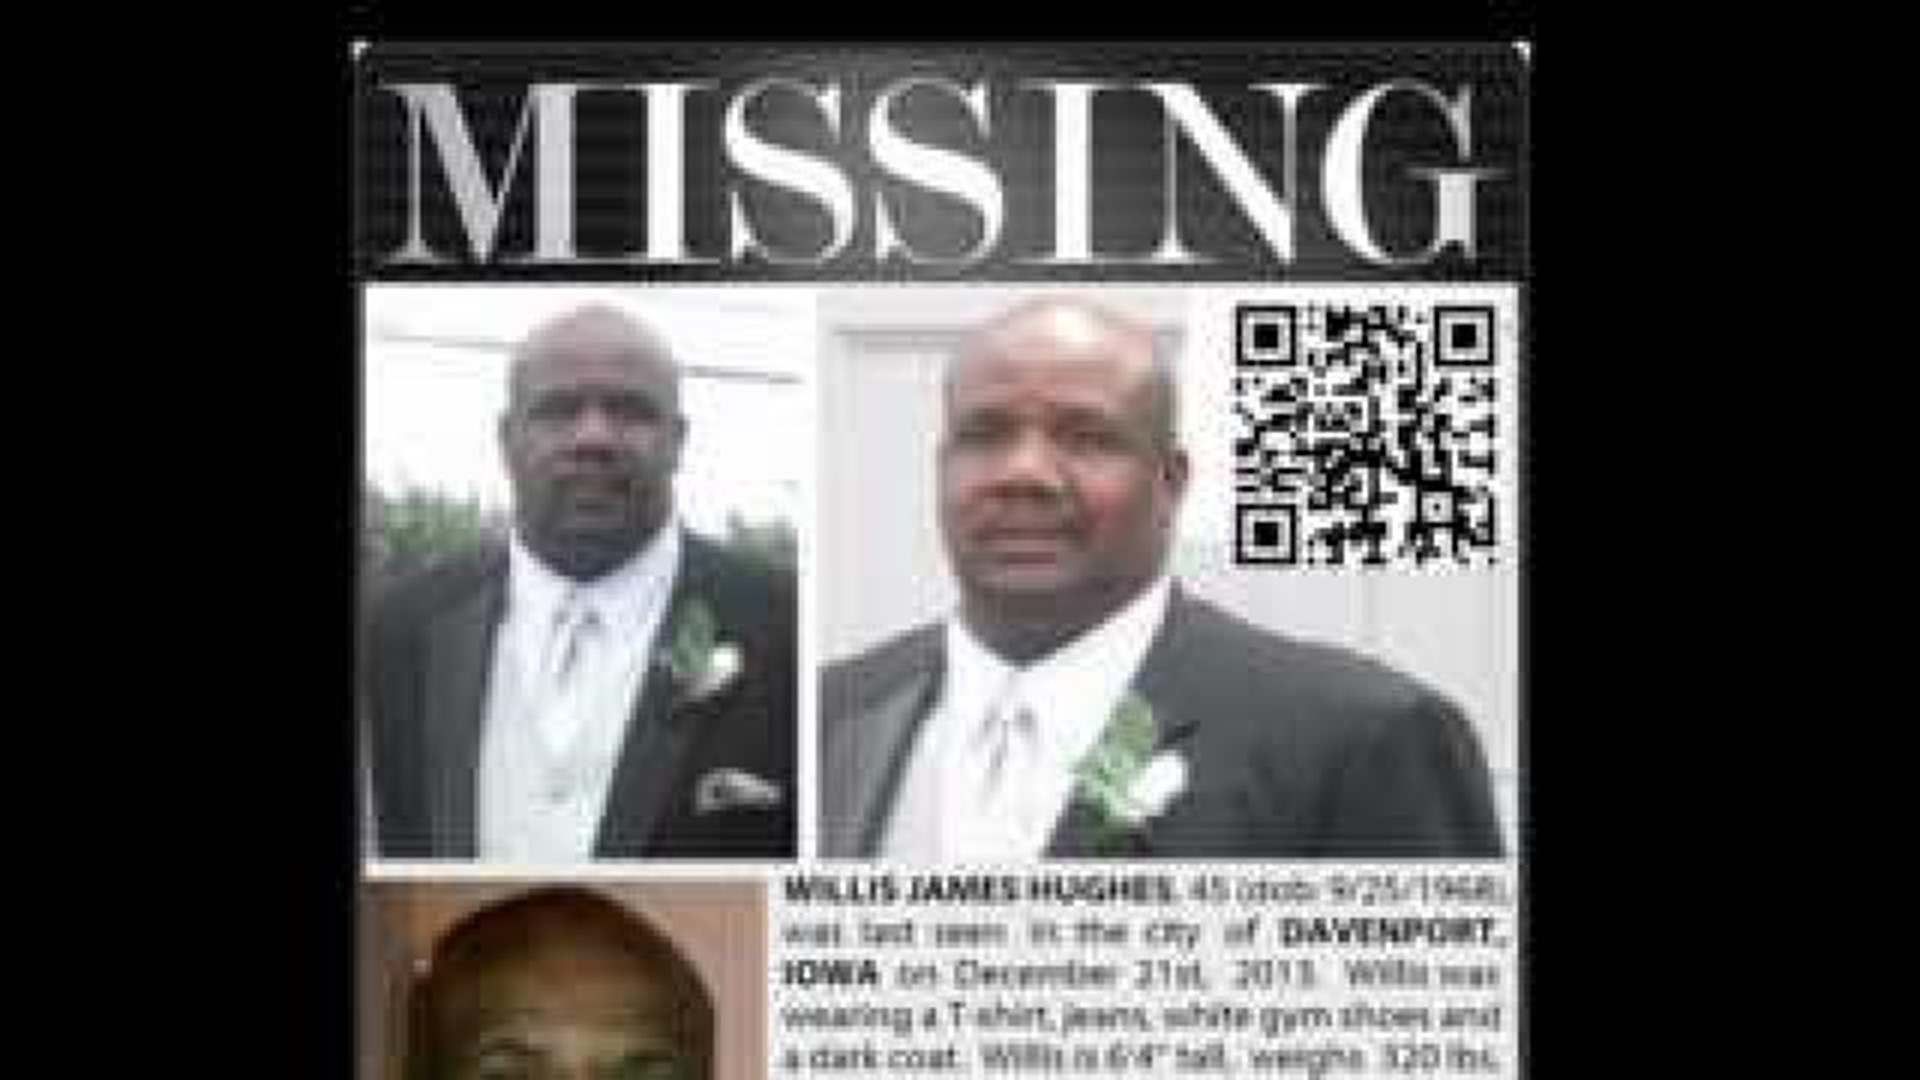 Willis Hughes is missing